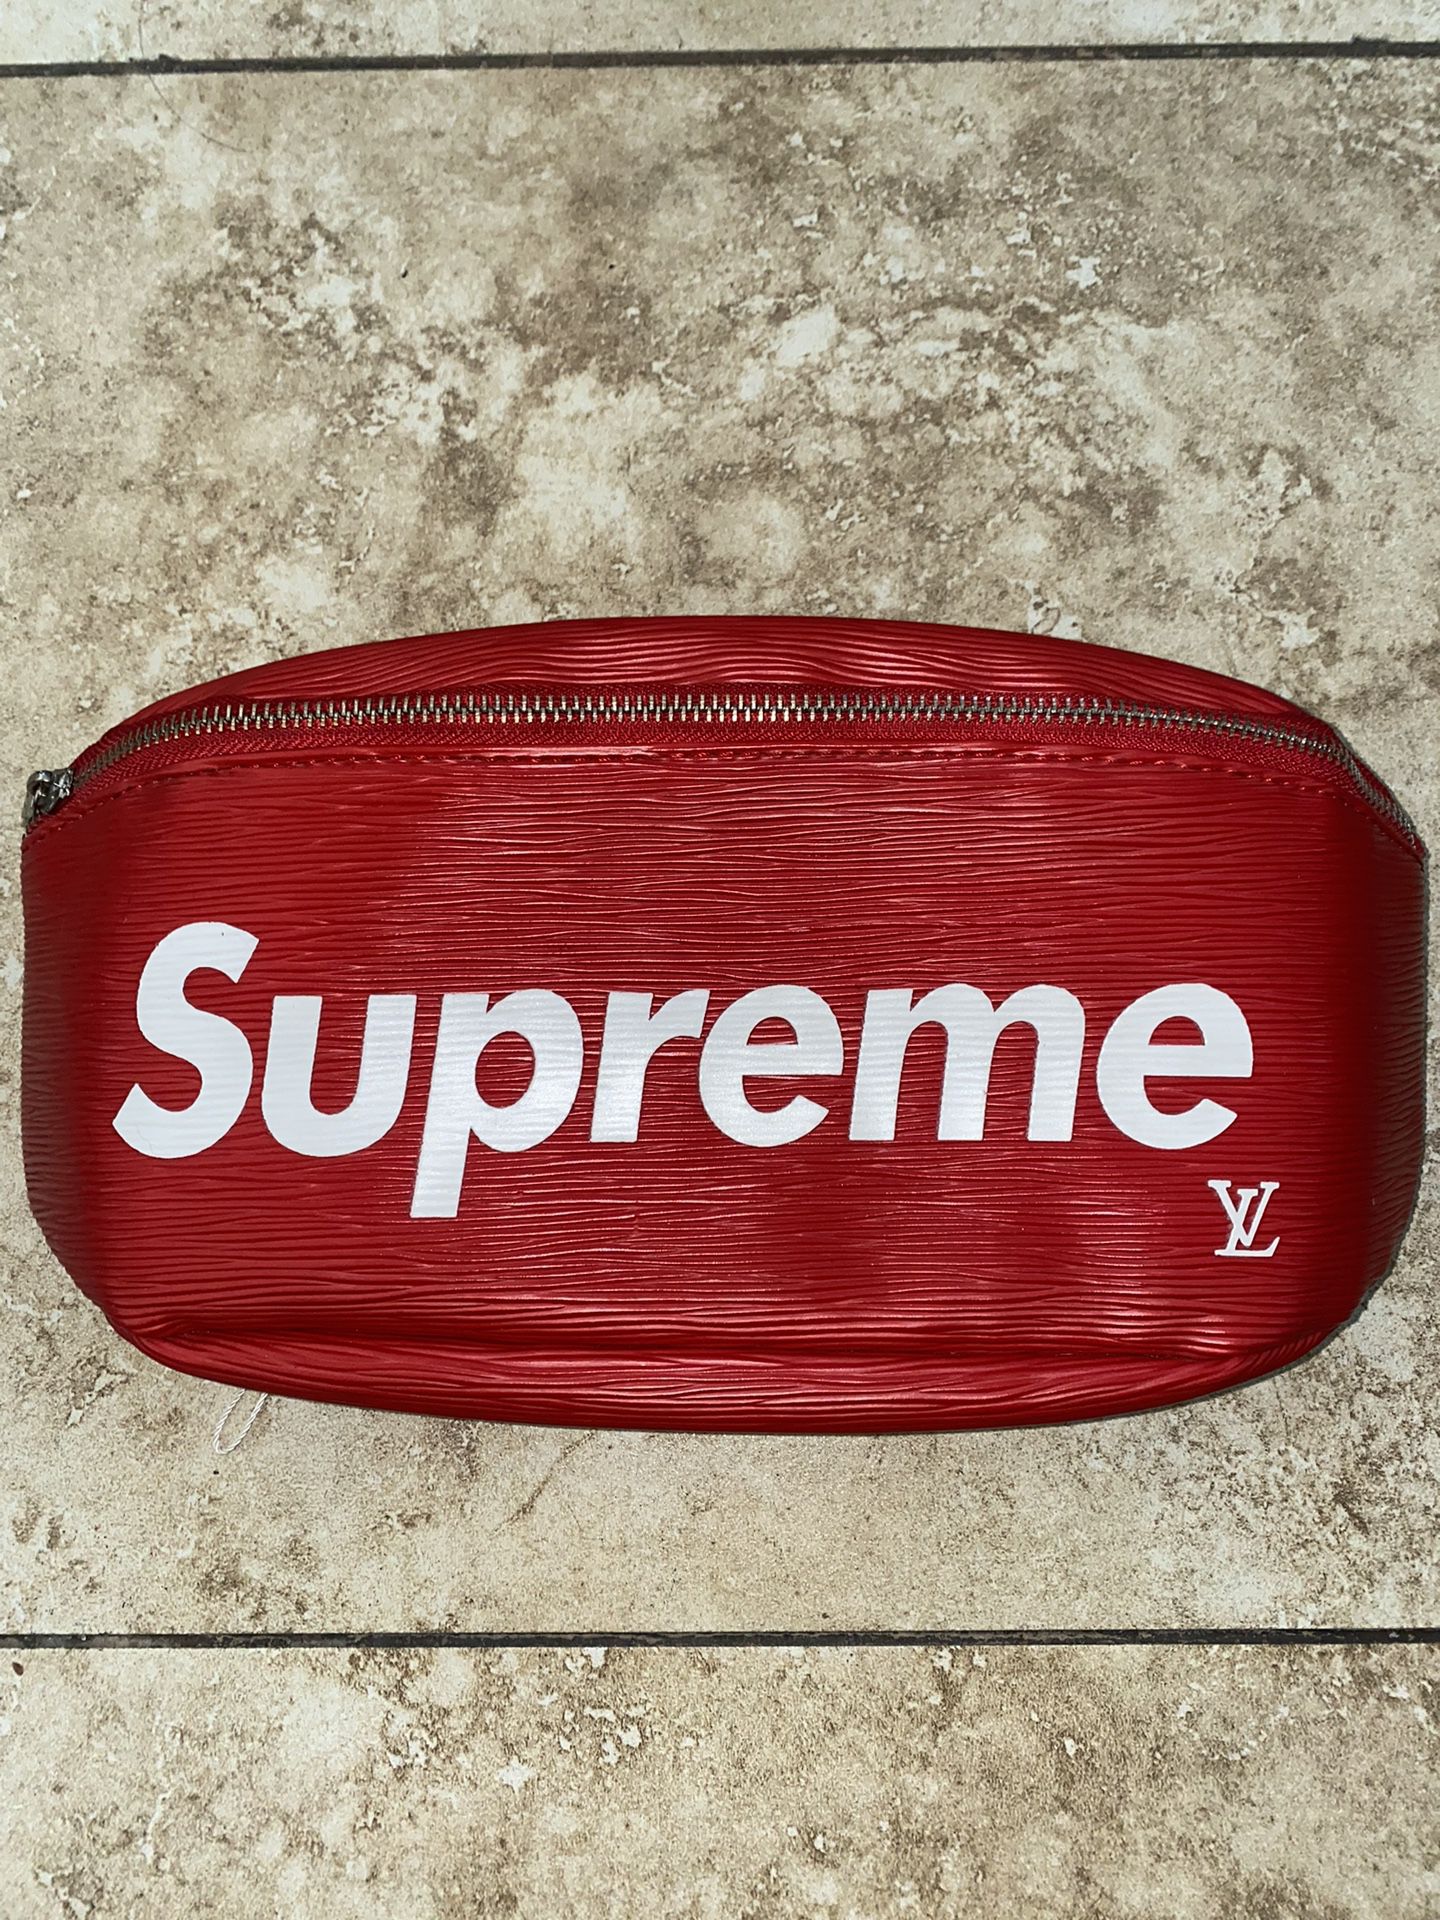 louis supreme belt bag